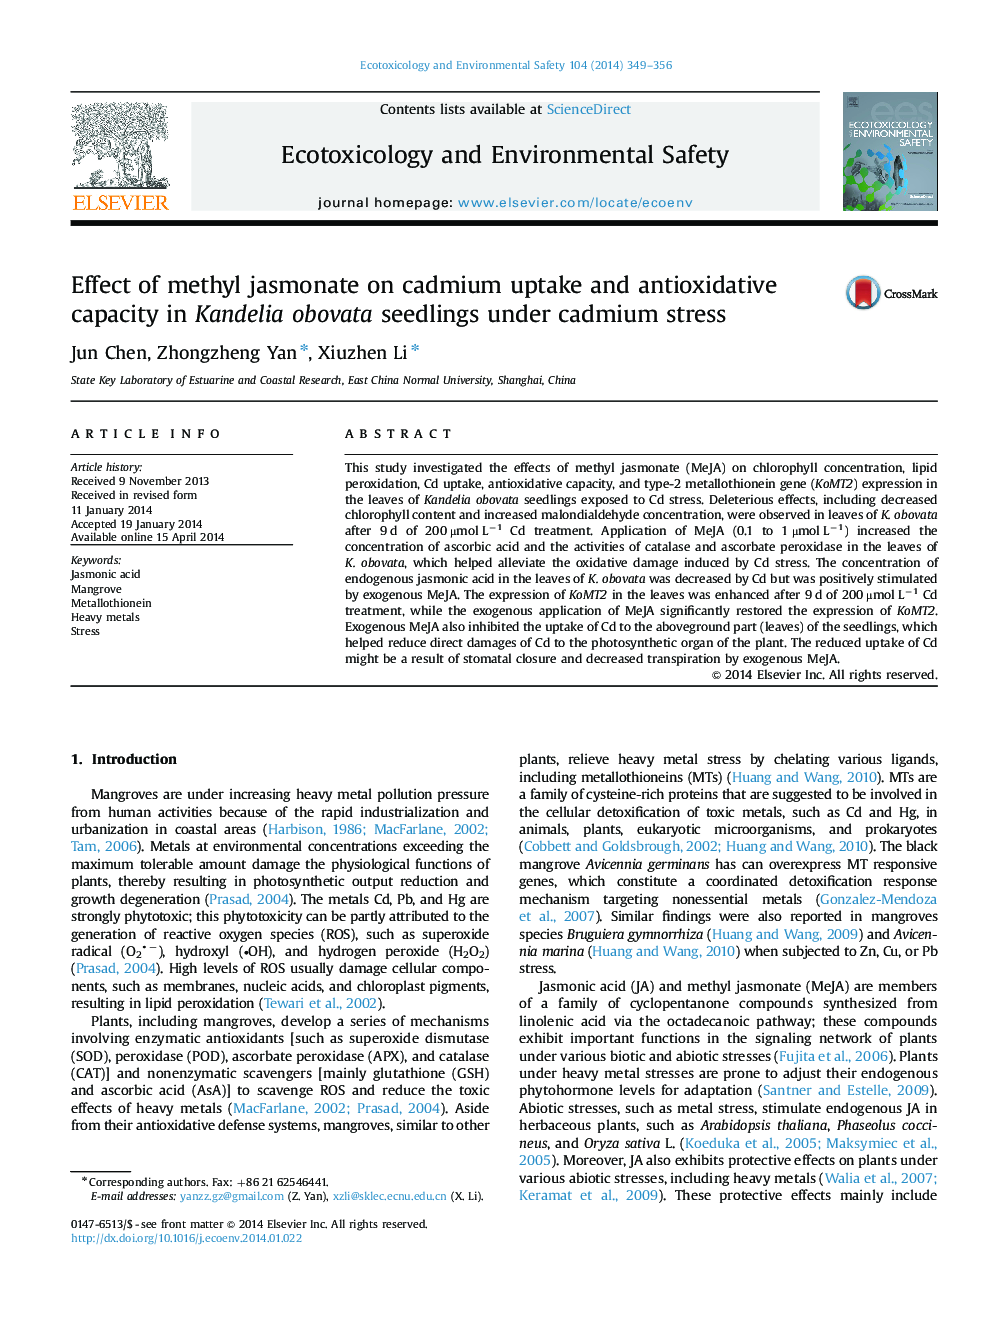 Effect of methyl jasmonate on cadmium uptake and antioxidative capacity in Kandelia obovata seedlings under cadmium stress